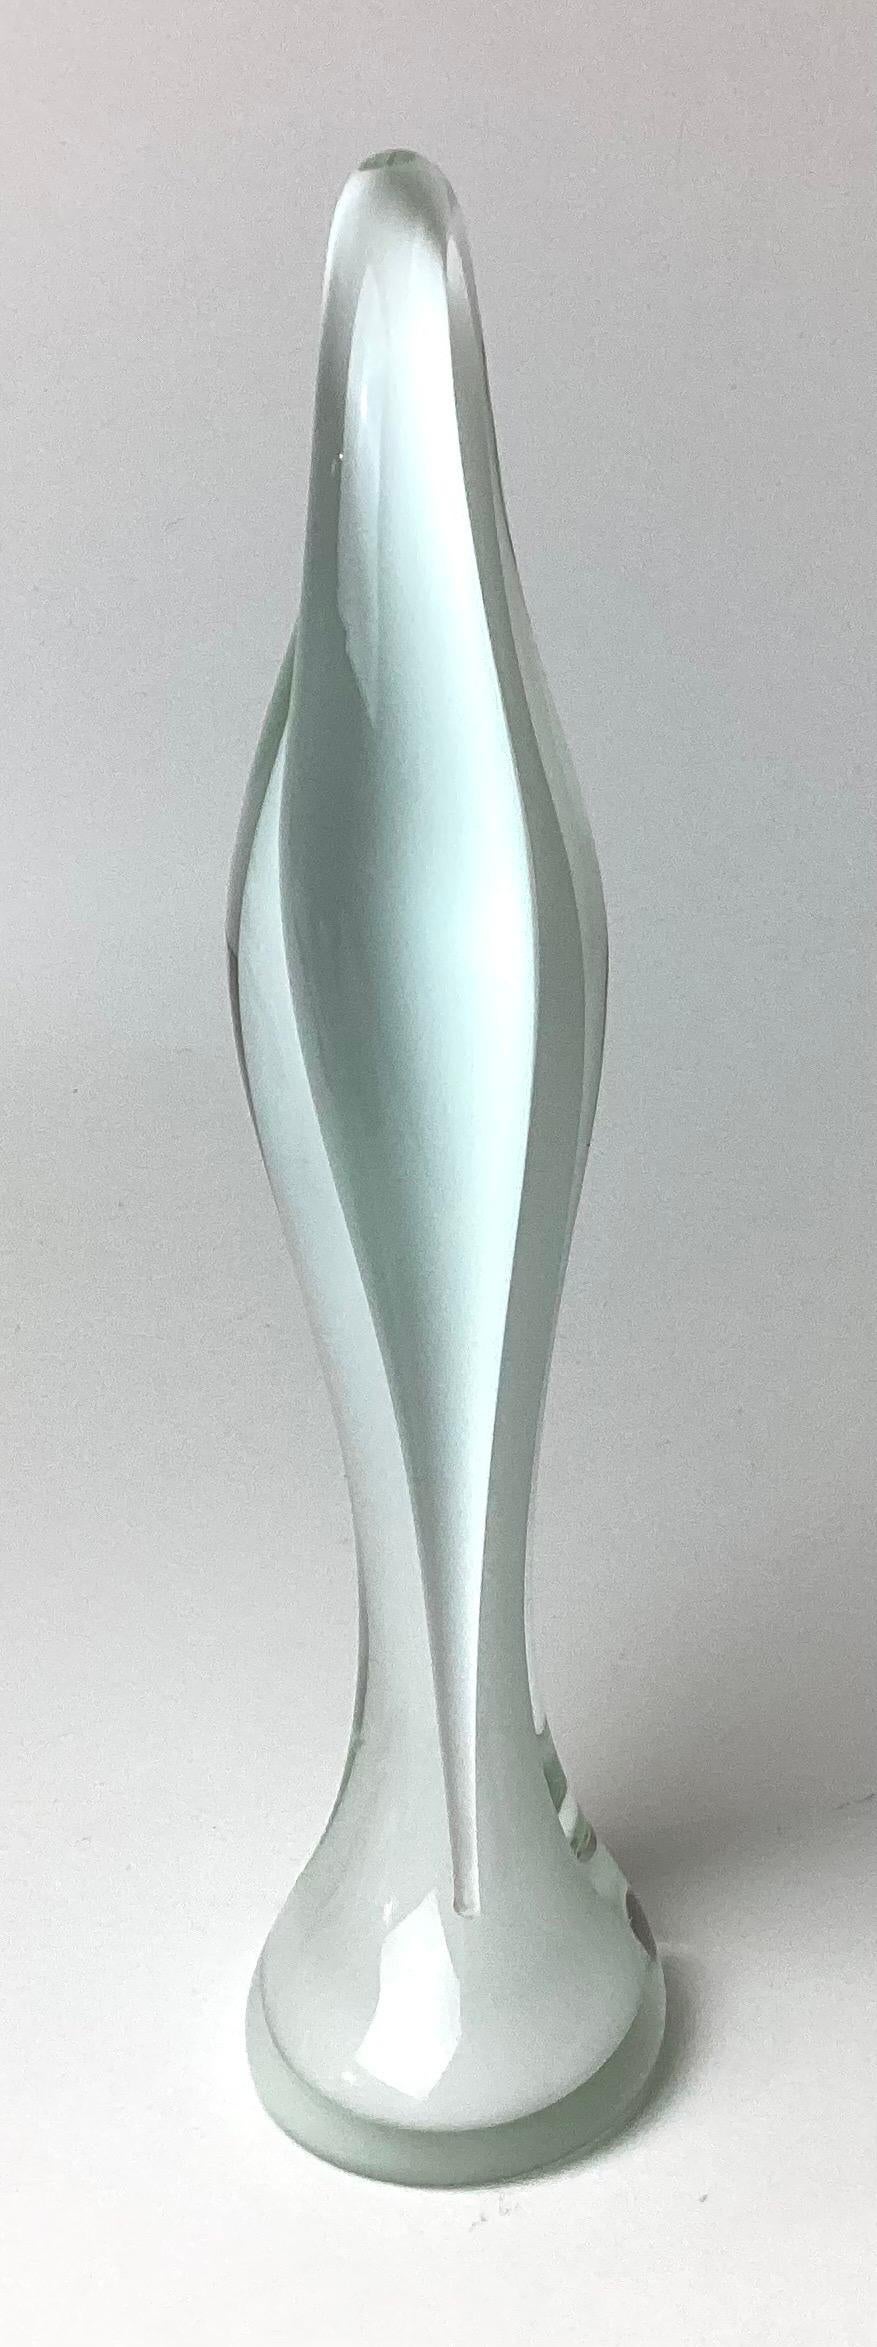 Renata Anatra Murano Art Glass stylized bird figurine signed. Very impressive size standing 14